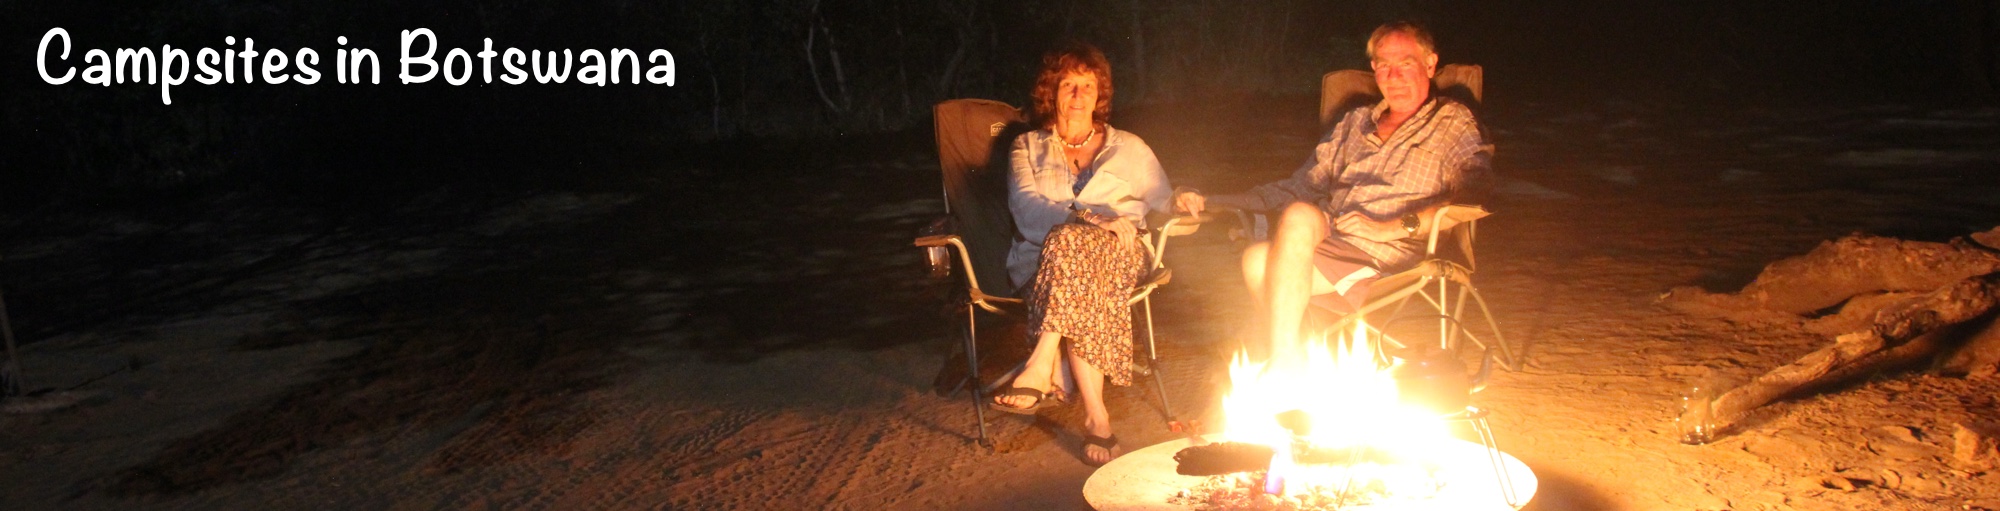 Sitting around a camp fire in Botswana.